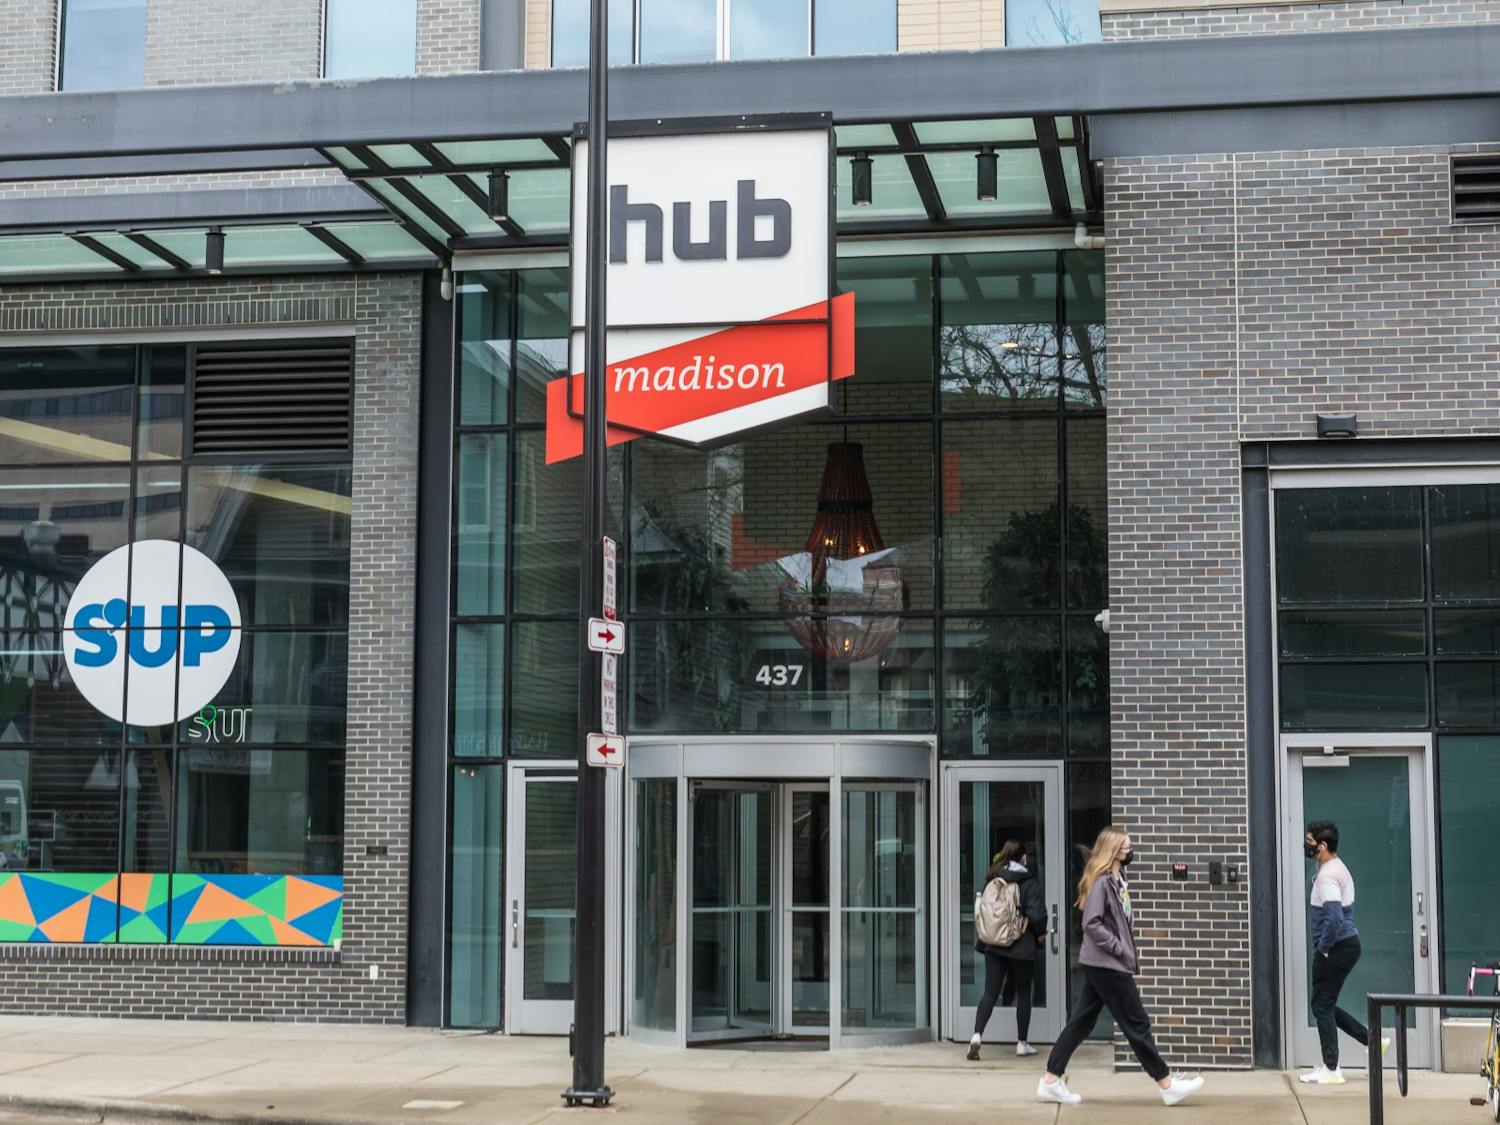 Photograph of the Hub.